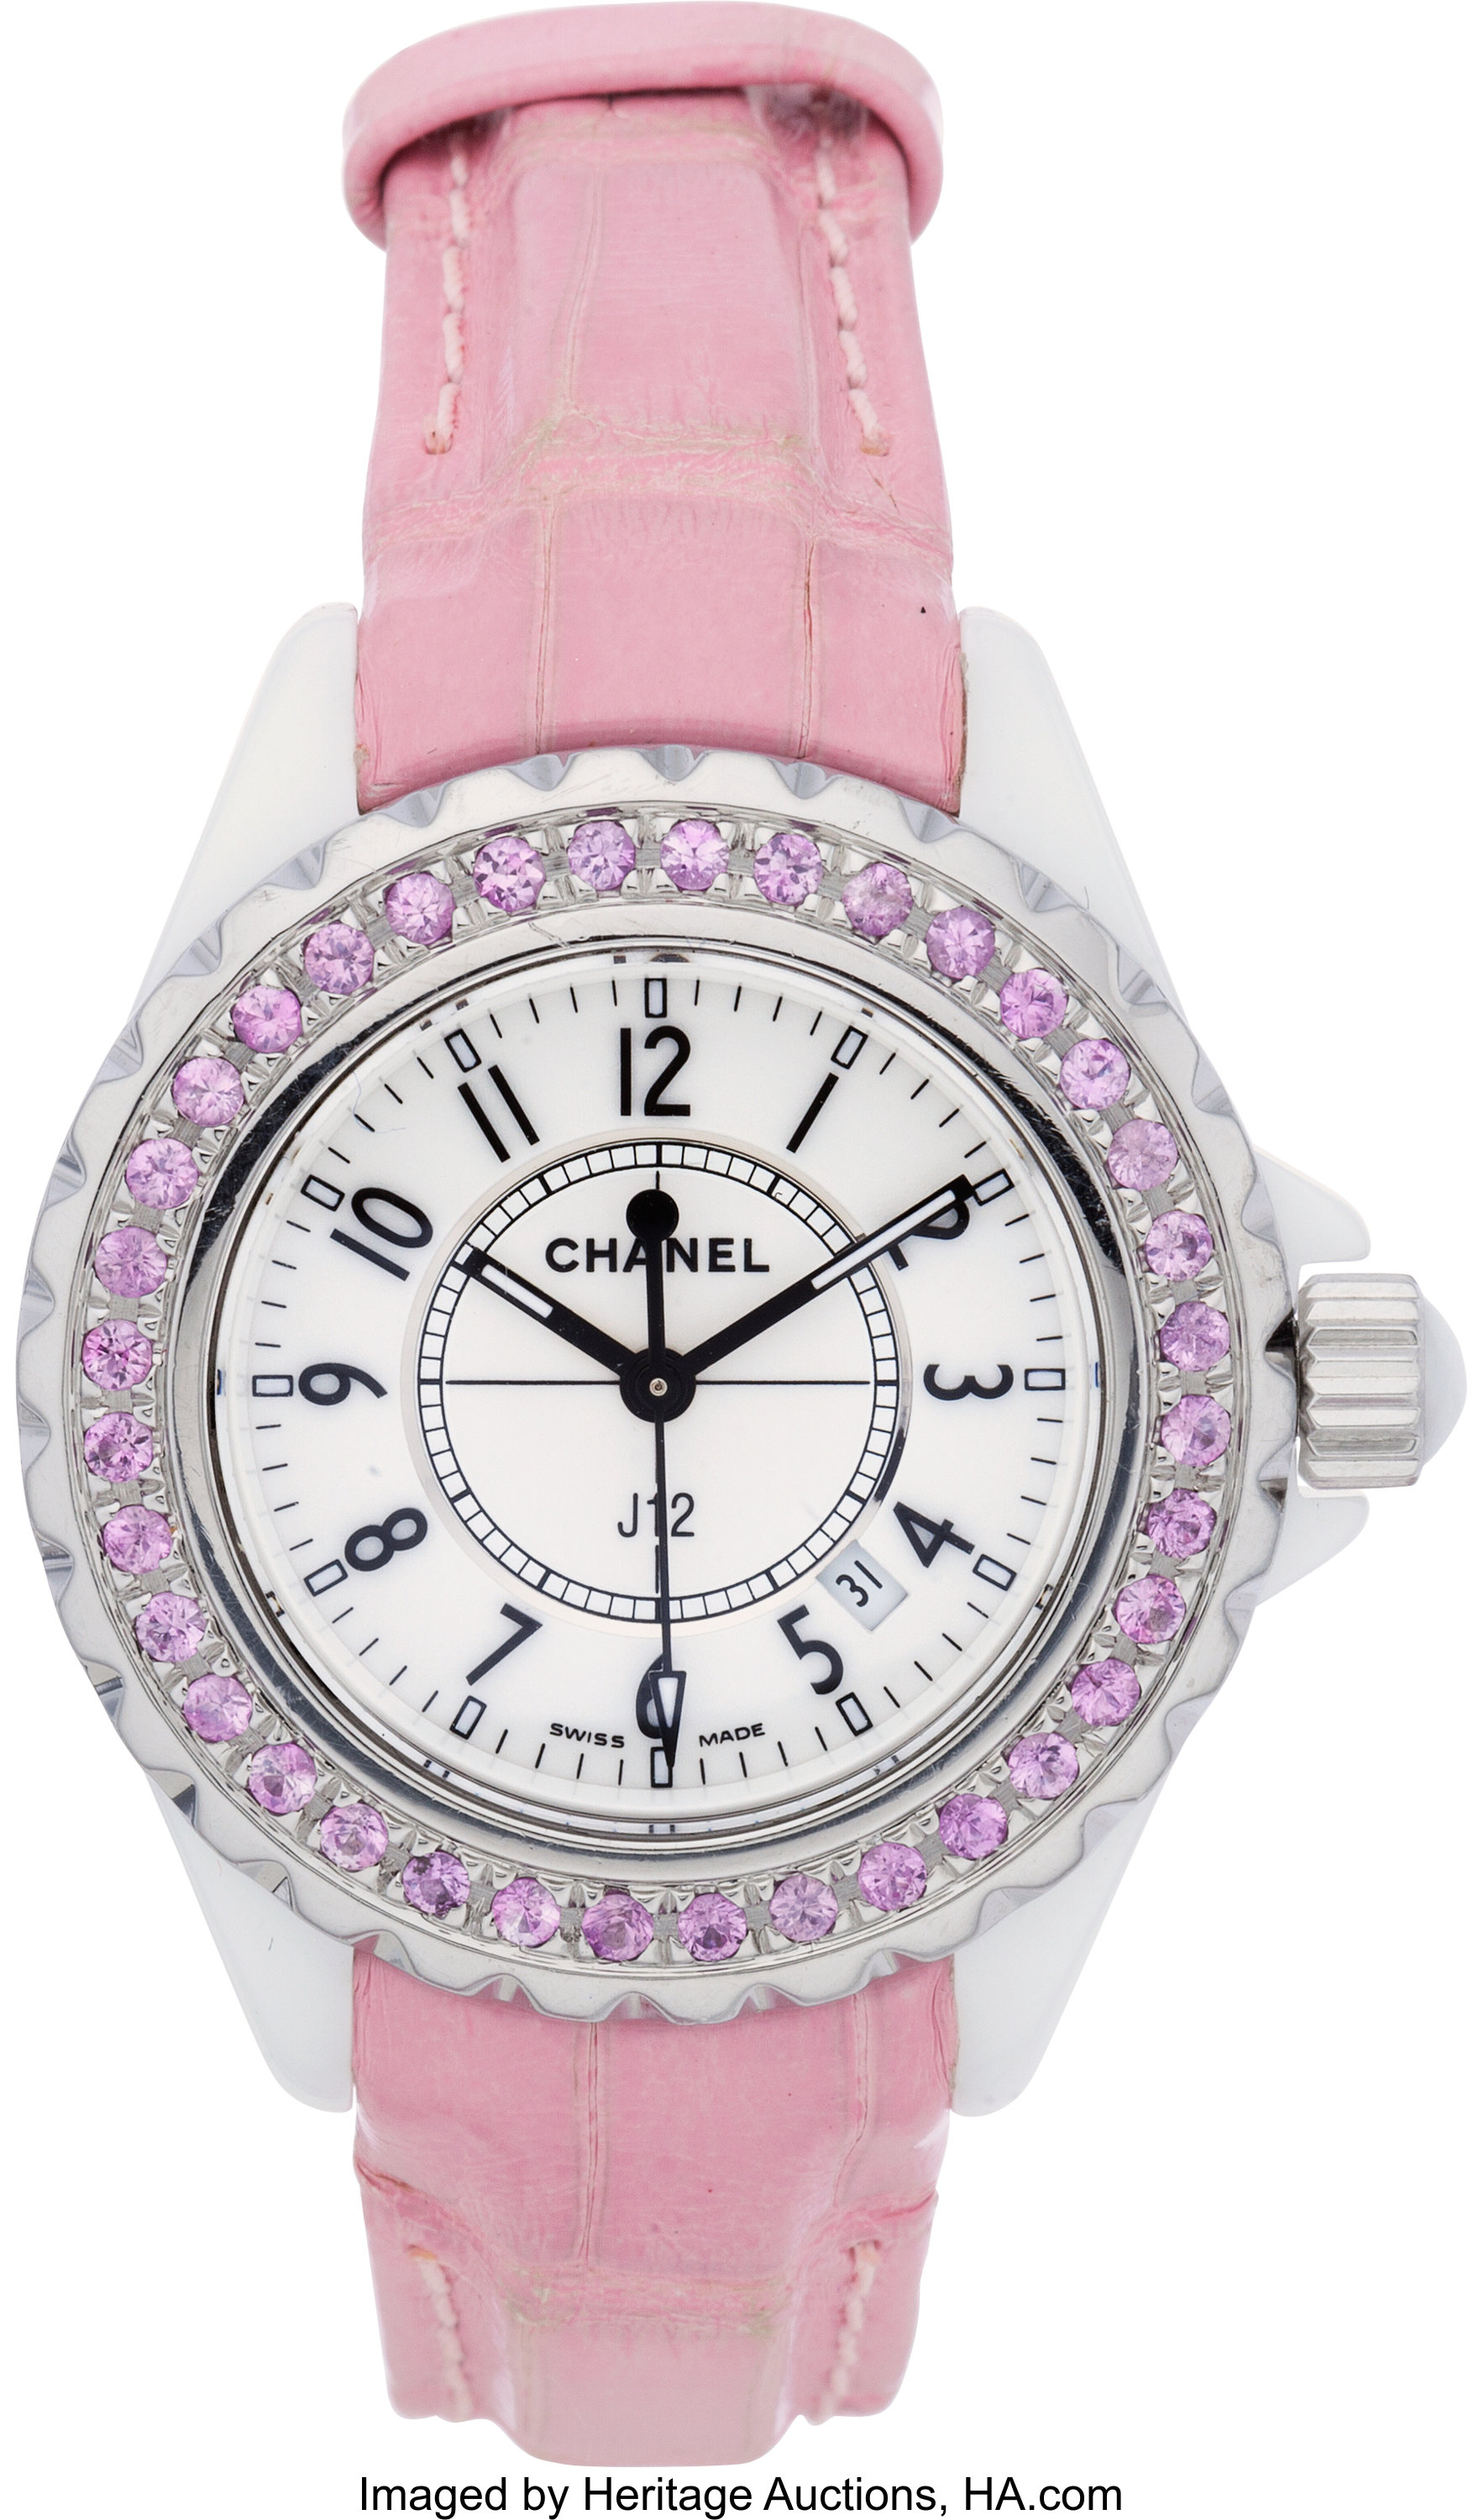 Sold at Auction: Chanel: A diamond-set 'J12' wristwatch